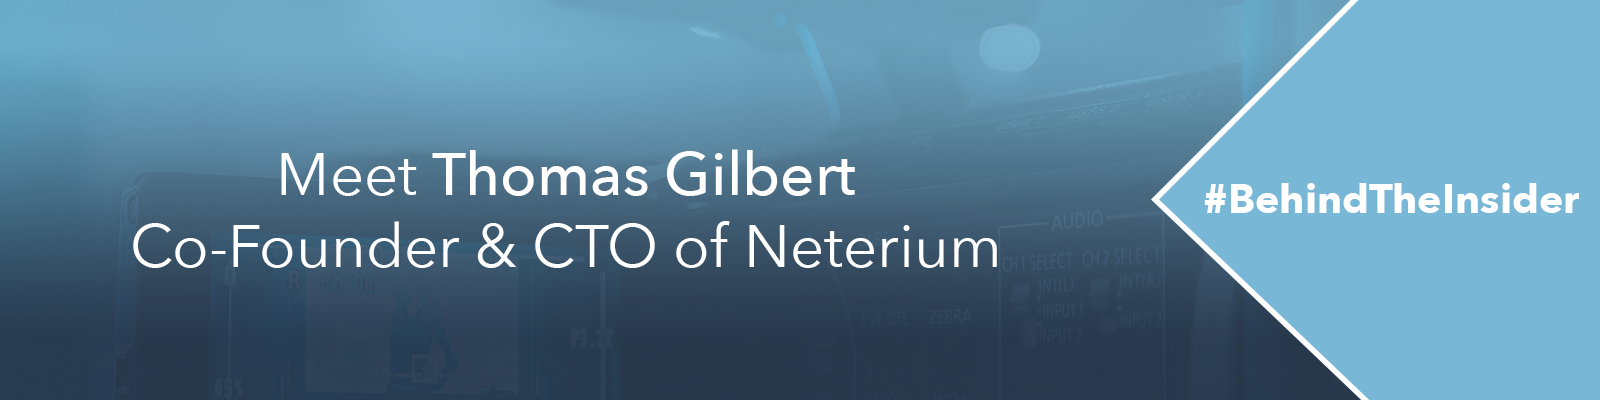 #BehindTheInsider - Meet Thomas Gilbert, Co-Founder & CTO at Neterium